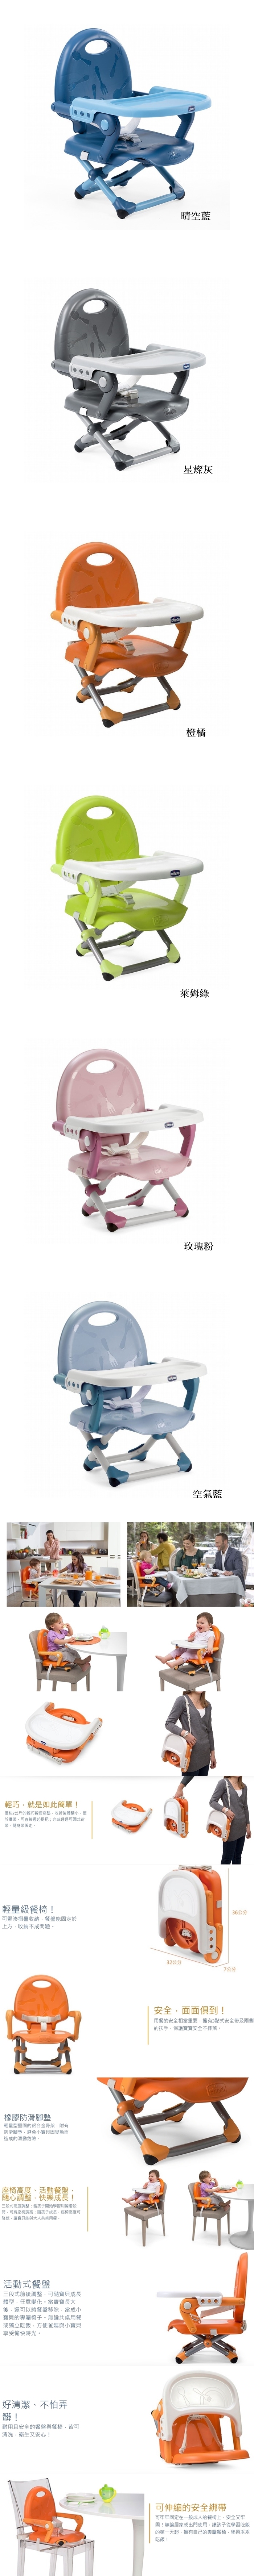 CHICCO-Pocket攜帶式輕巧餐椅座墊(晴空藍/星燦灰/橙橘/萊姆綠/玫瑰粉/空氣藍)CBB79340